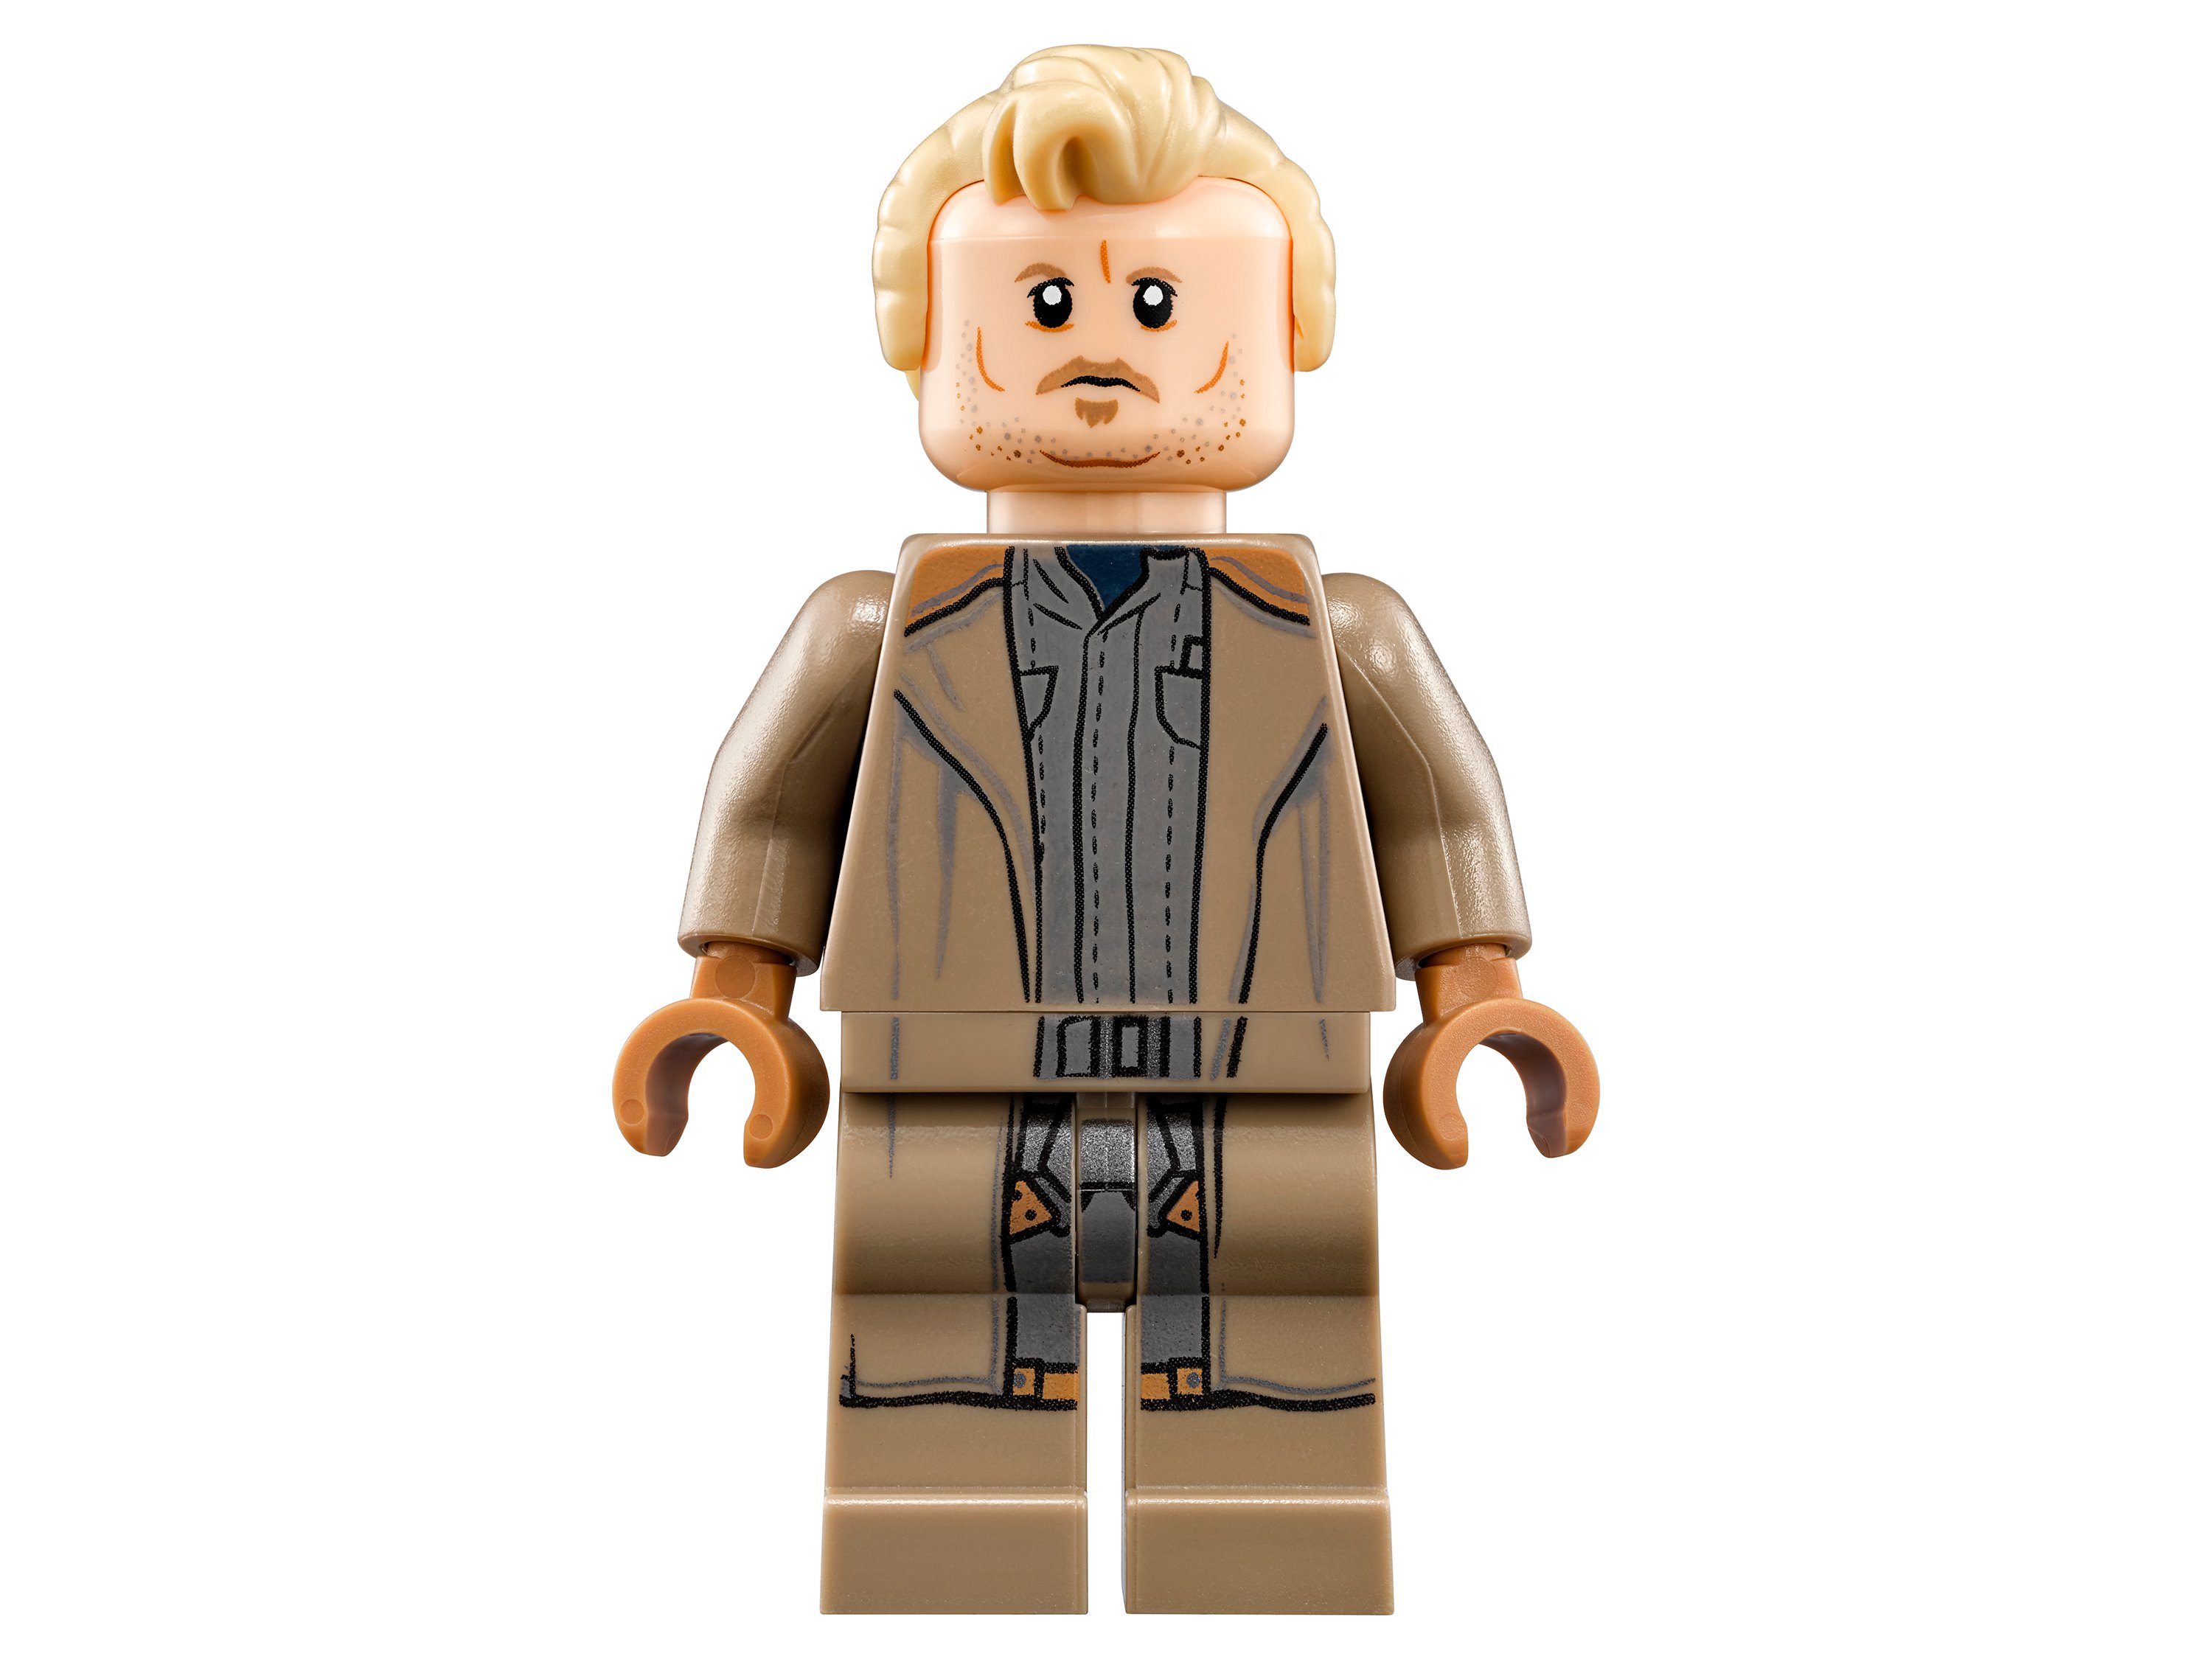 Lego Star Wars 75215 Свуп-байки